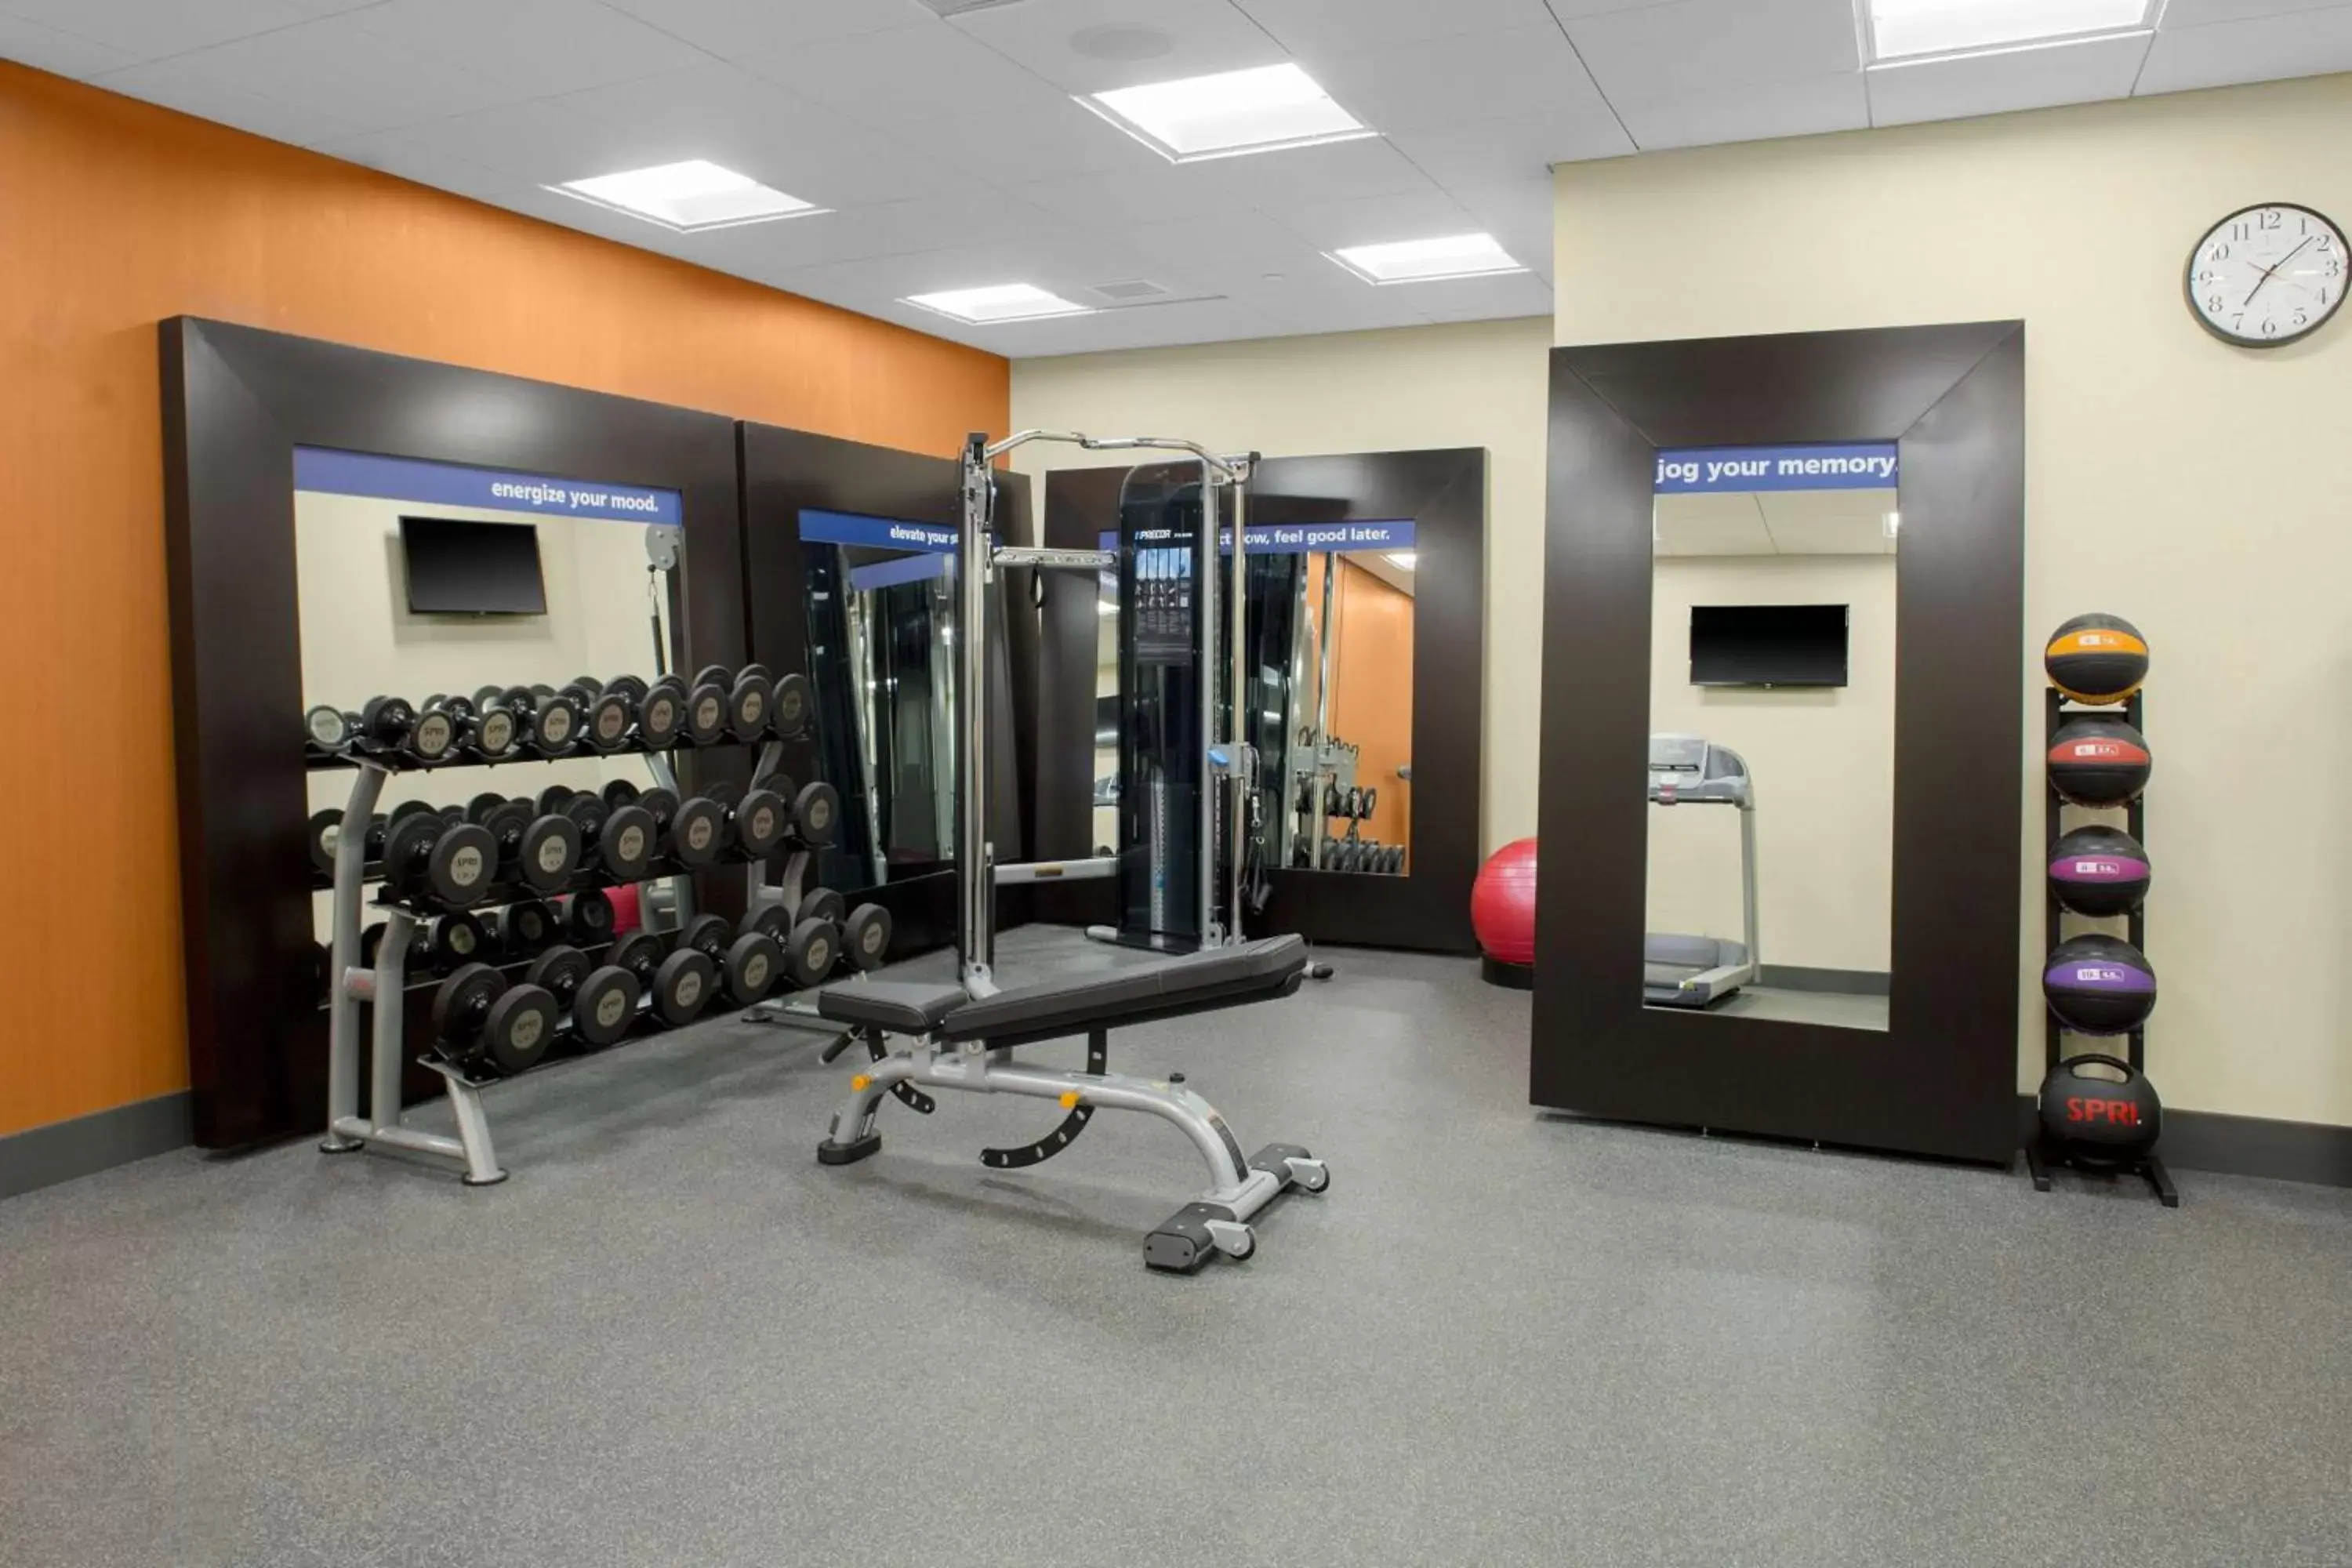 Fitness centre/facilities, Fitness Center/Facilities in Hampton Inn & Suites Manchester, Vt